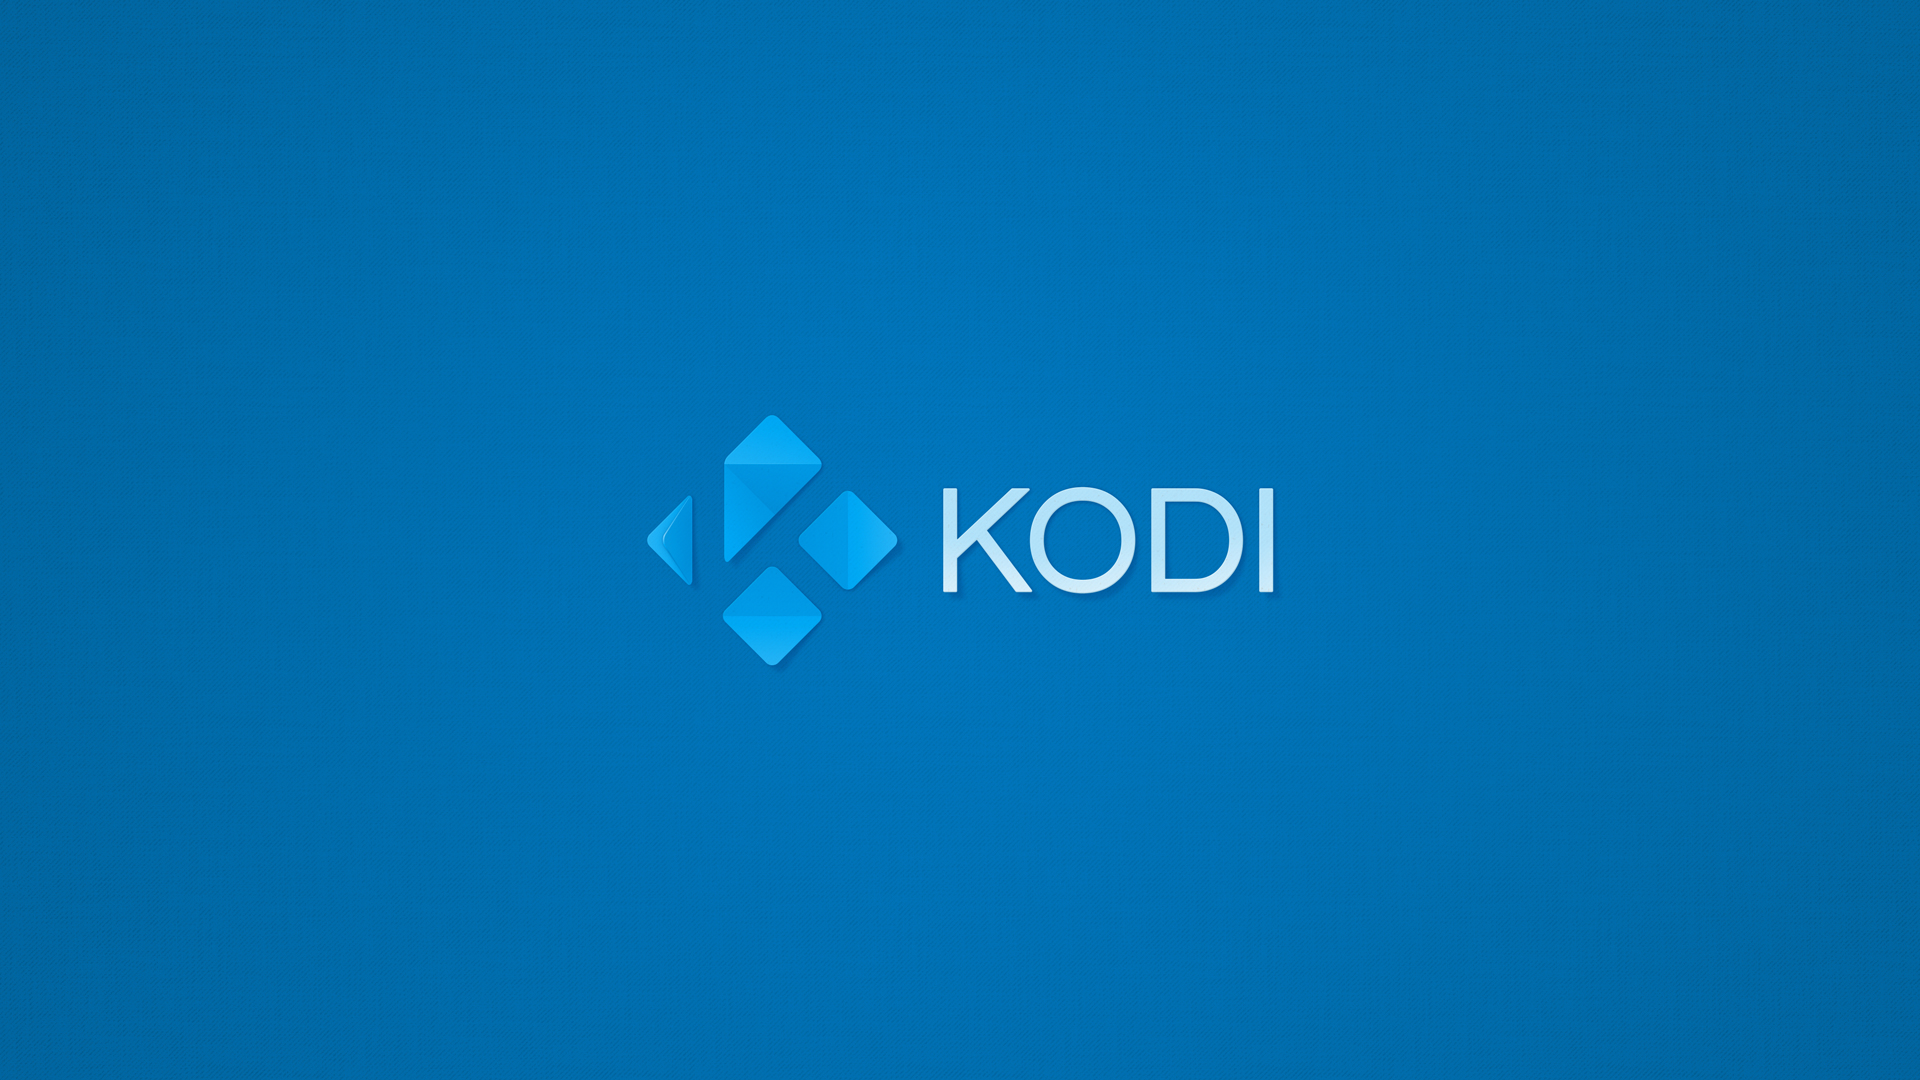 File:Kodi-Wallpaper-17C-1080p samfisher.jpg